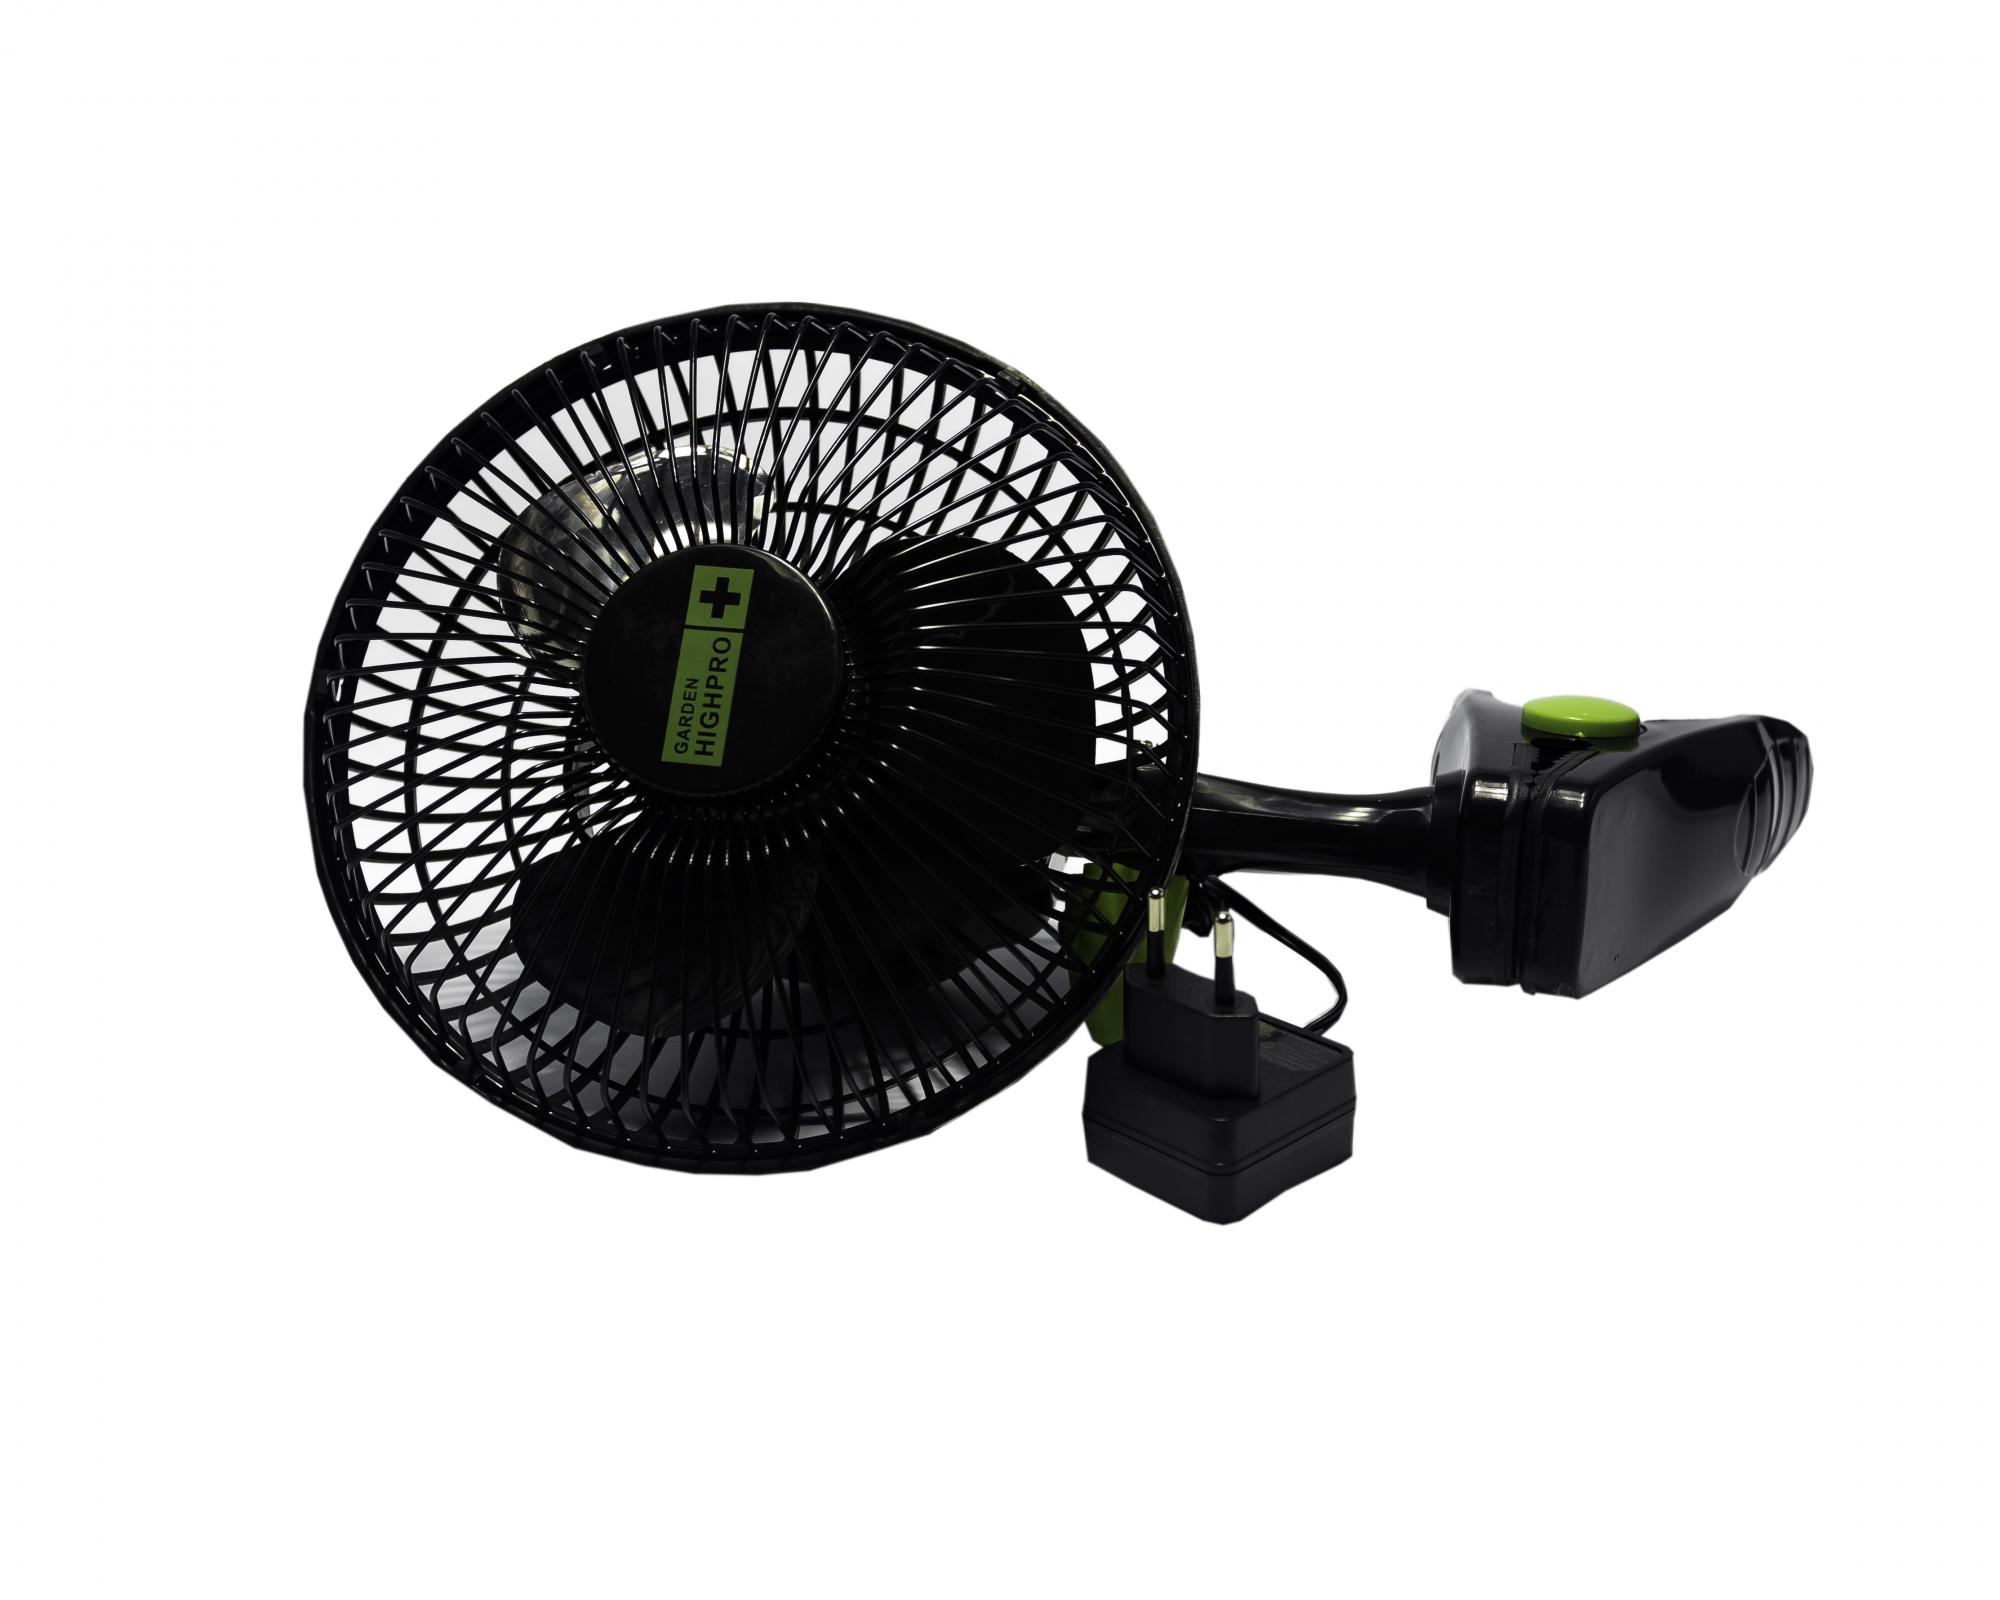 Вентилятор для гроубокса. Вентилятор на клипсе clip Fan 15 см/15 Вт. Clip Fan 15cm-5w. Garden HIGHPRO вентилятор на клипсе. Вентилятор clip Fan 20см/12w.